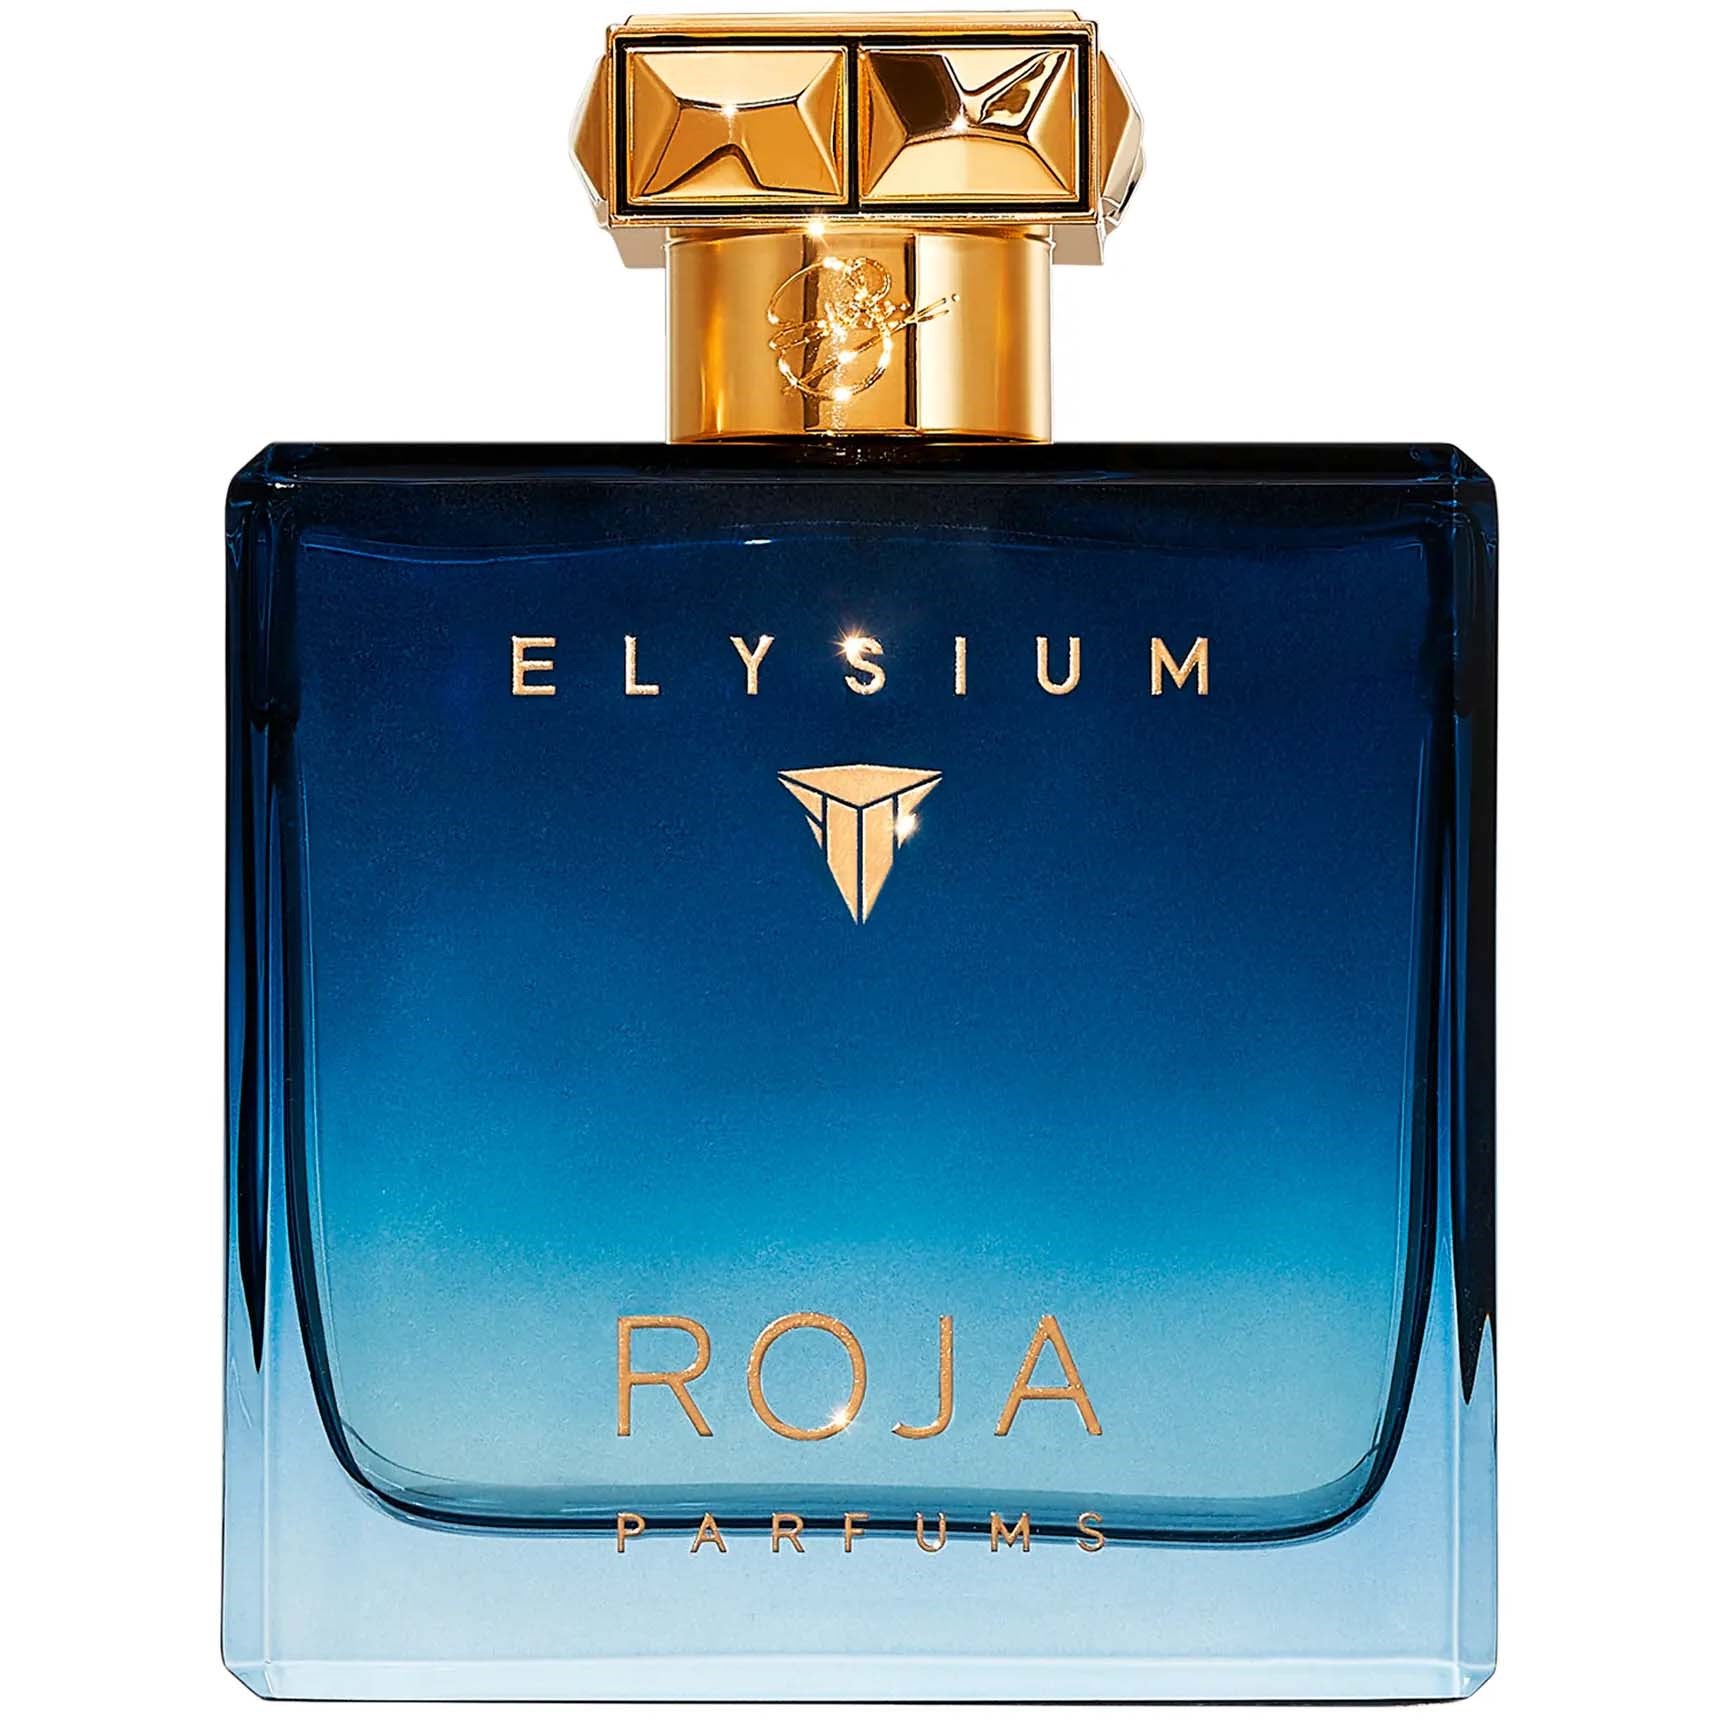 ROJA PARFUMS Elysium Parfum Cologne 100 ml